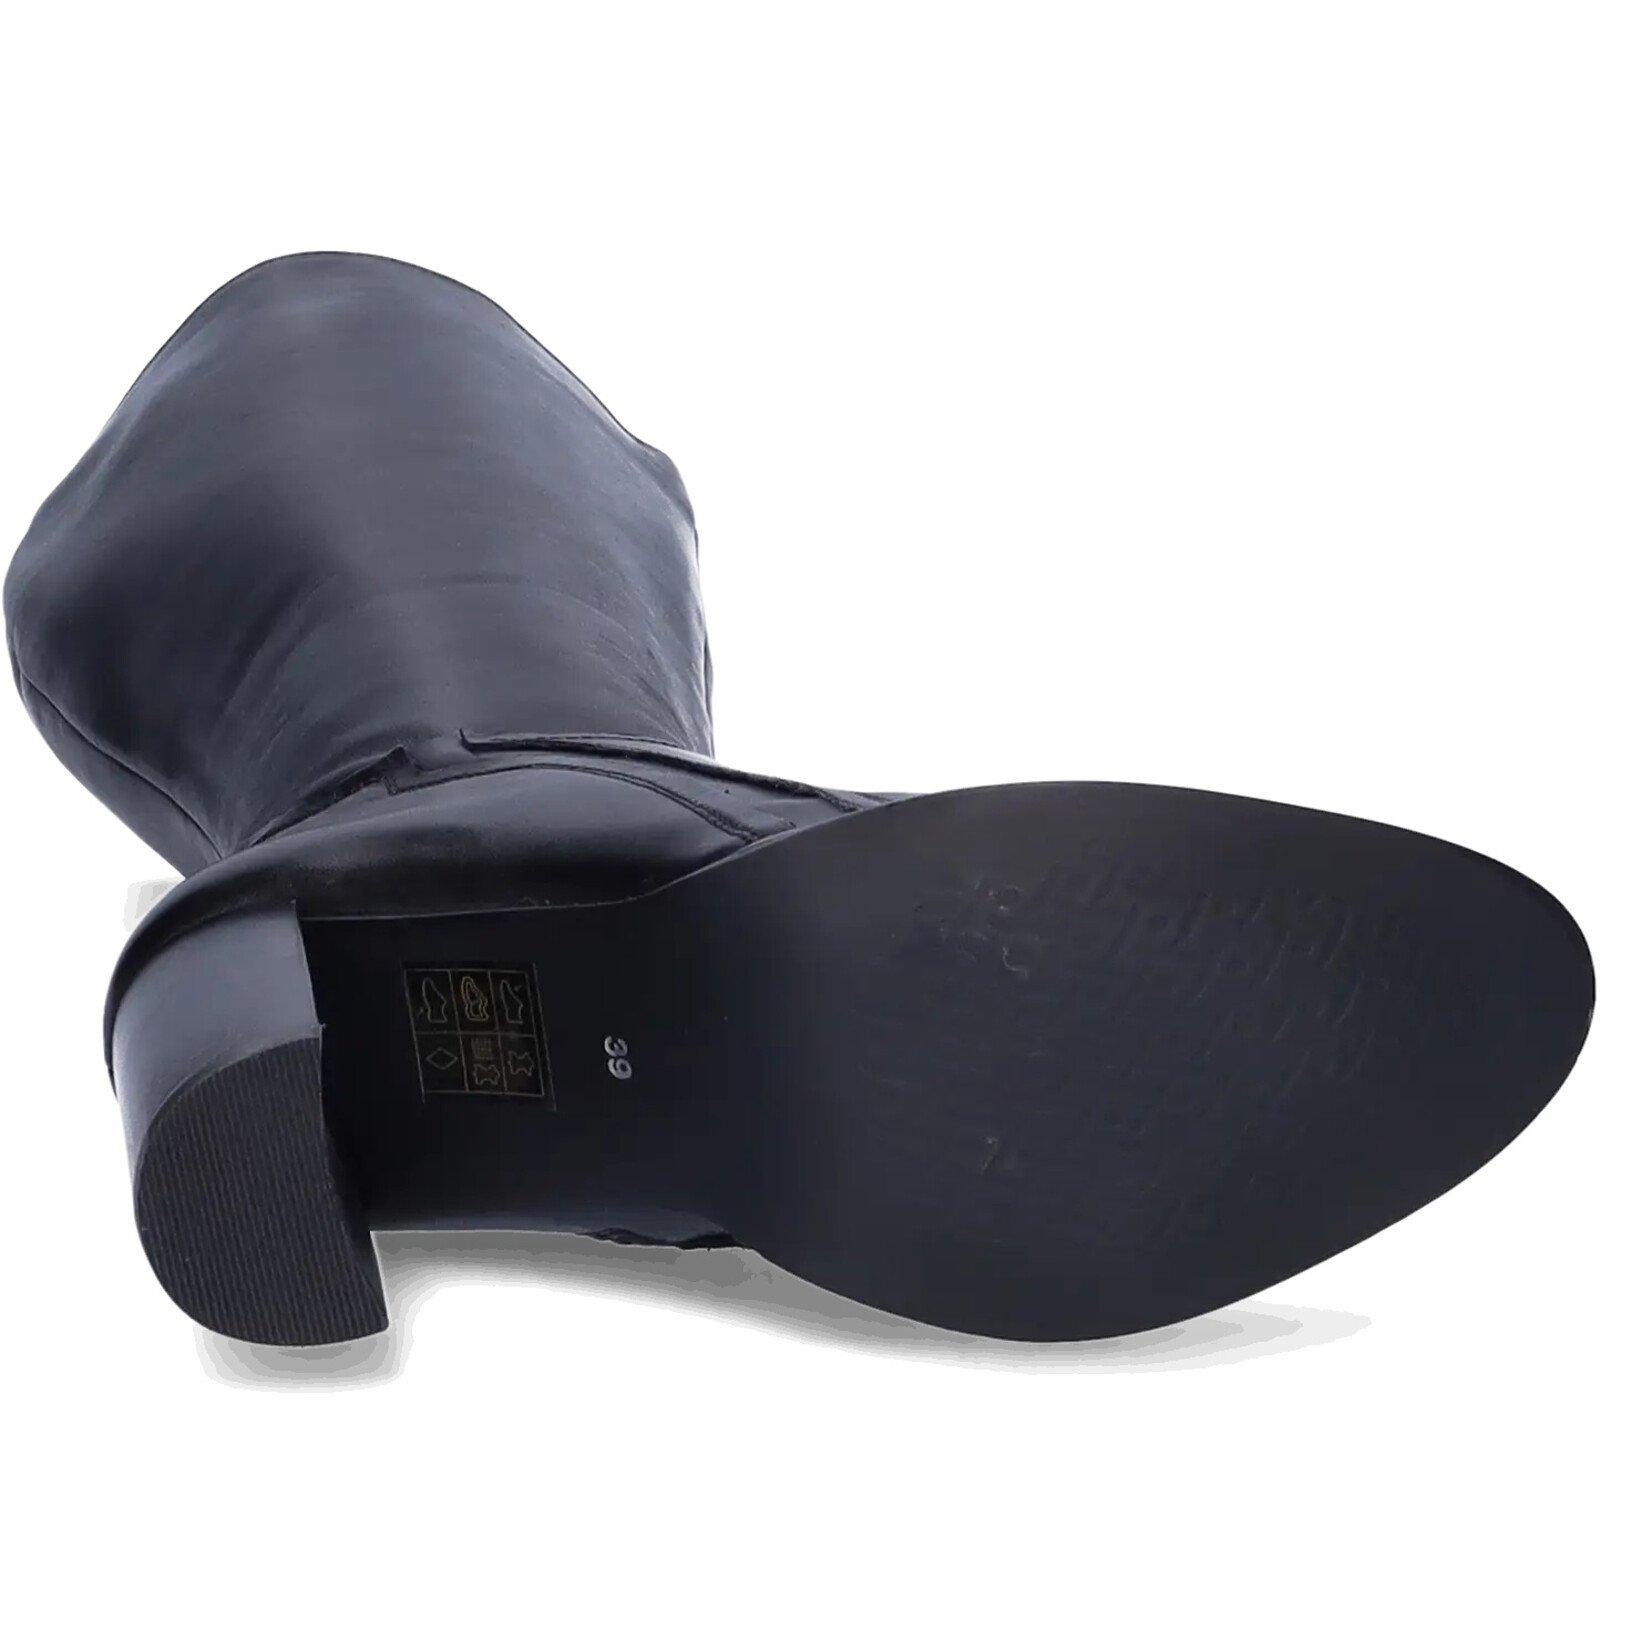 JJ Footwear Santorini - Black